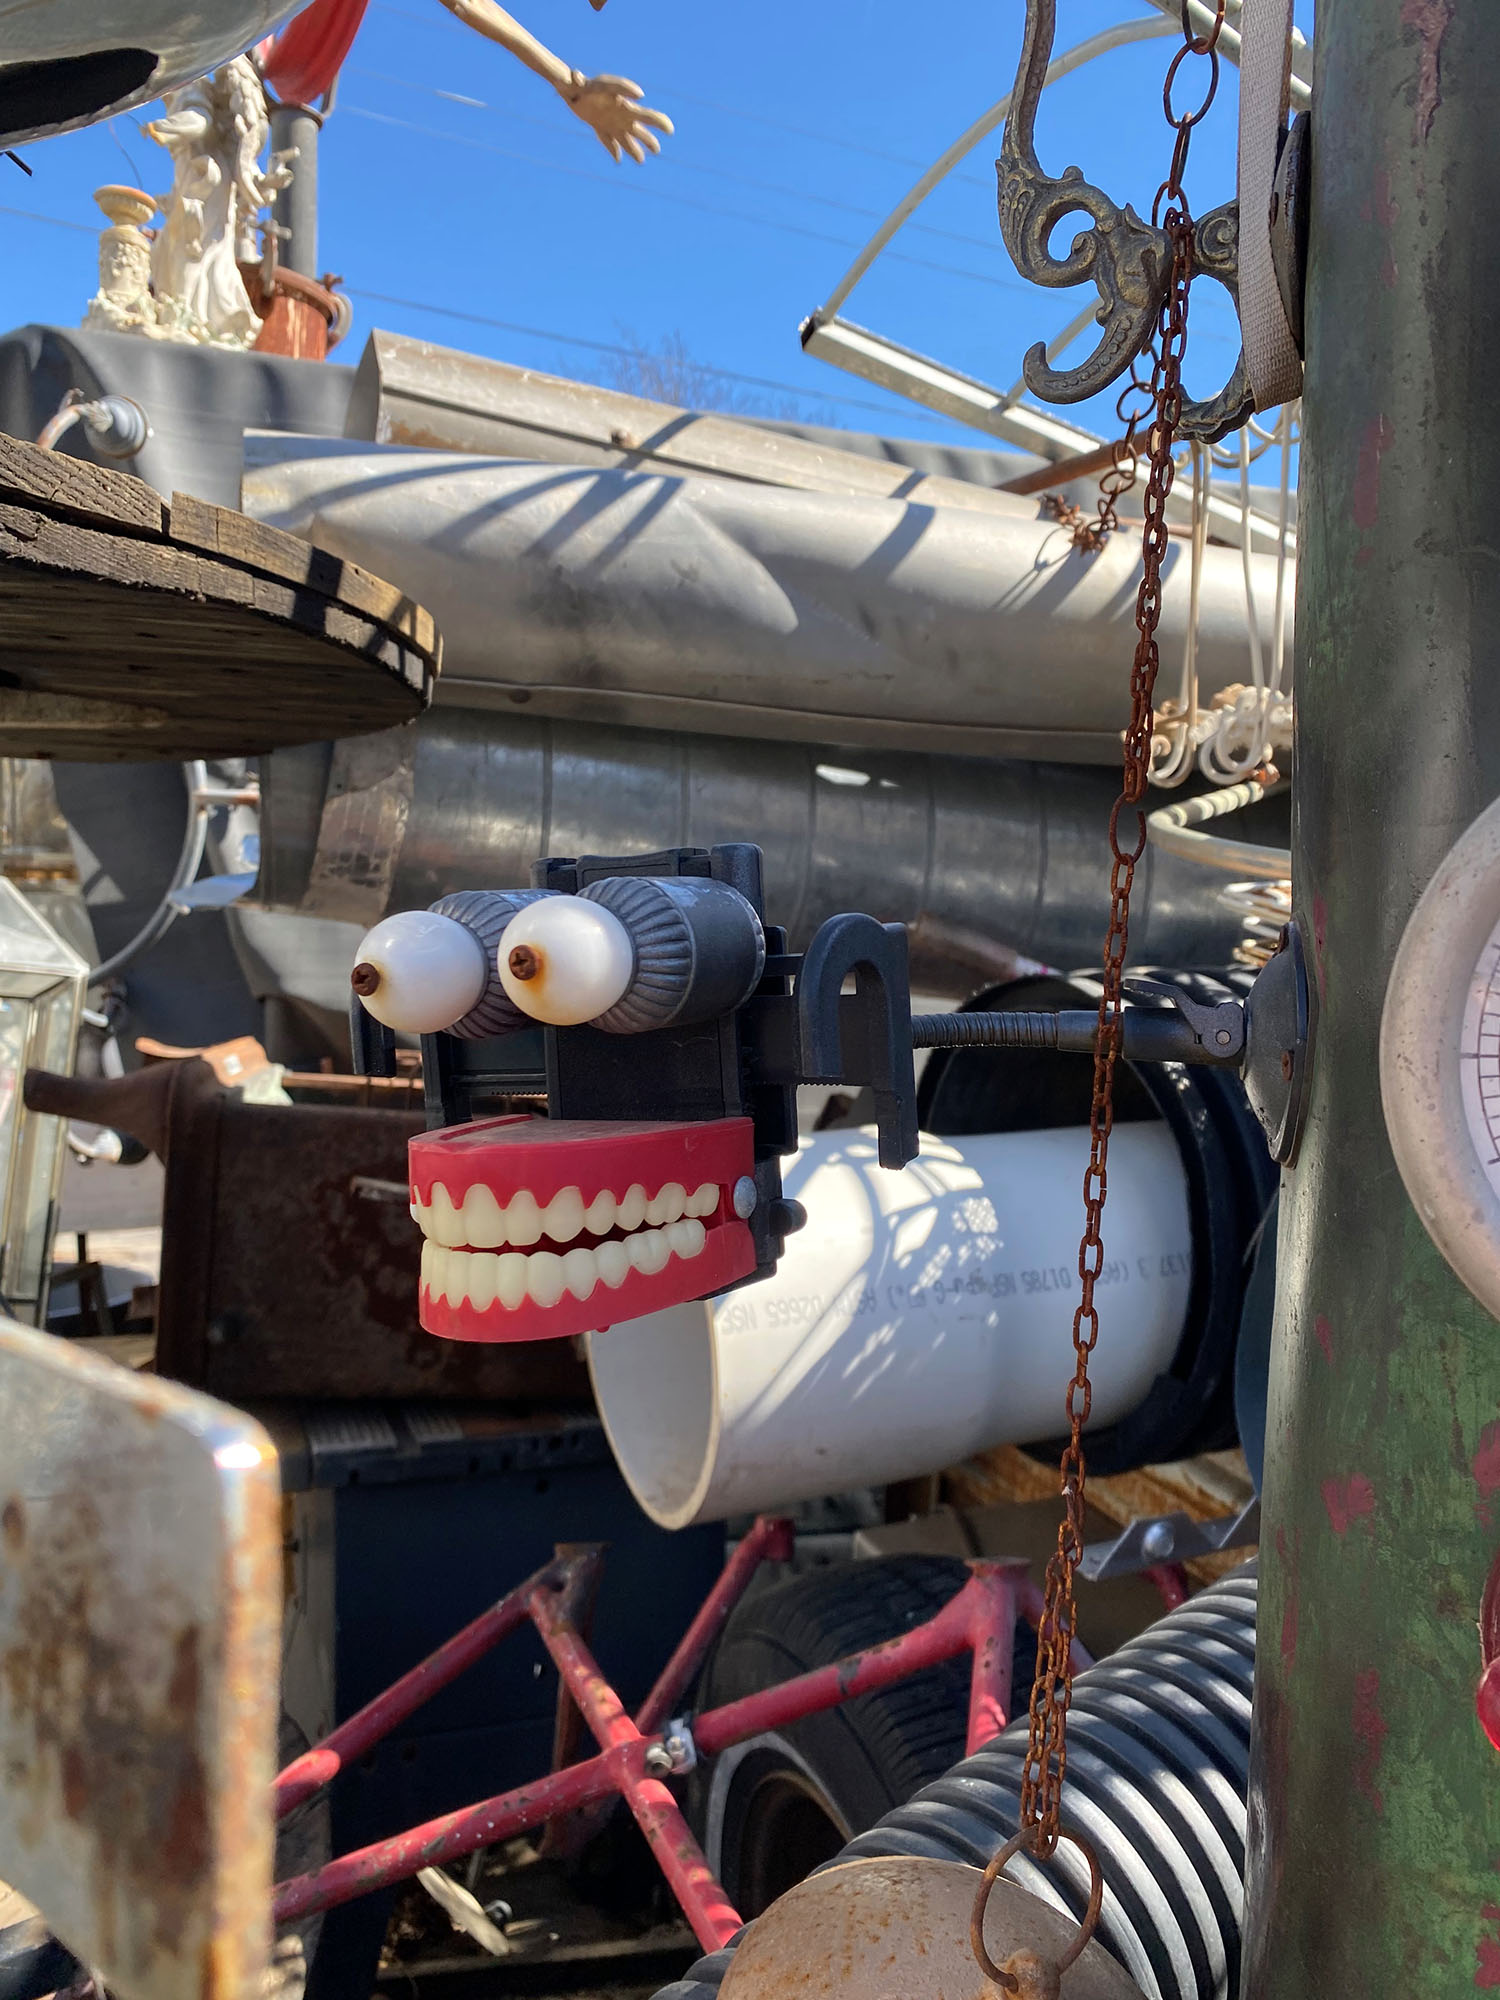 Chattering teeth with eyes at Gary Pendergrass' steampunk art installation in Wichita, Kansas